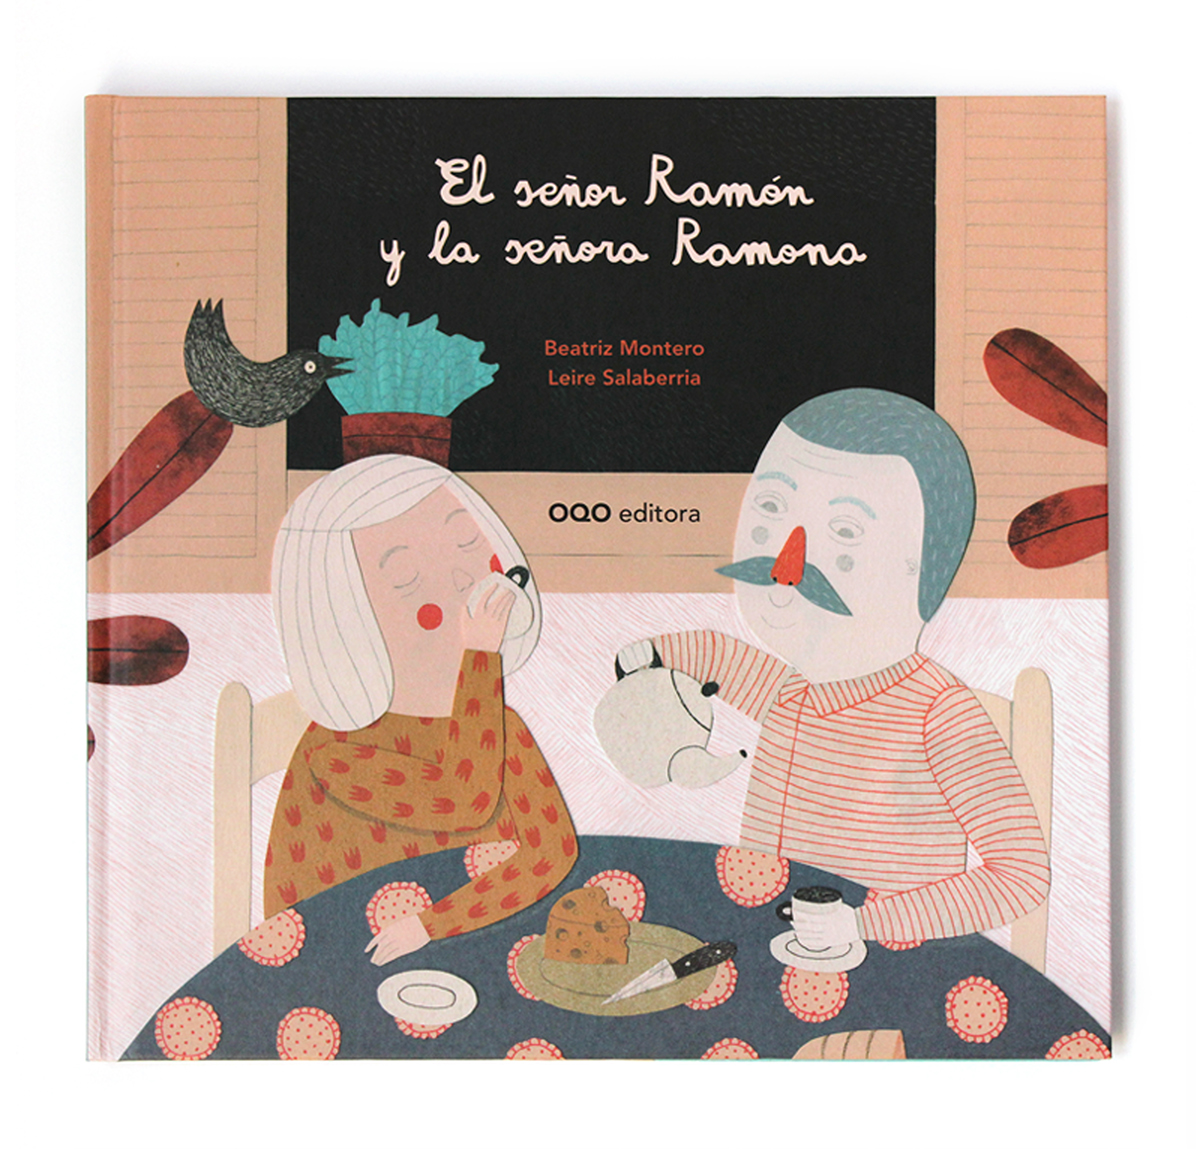 El señor Ramón book ilustracion ilustración infantil book for children's leire salaberria